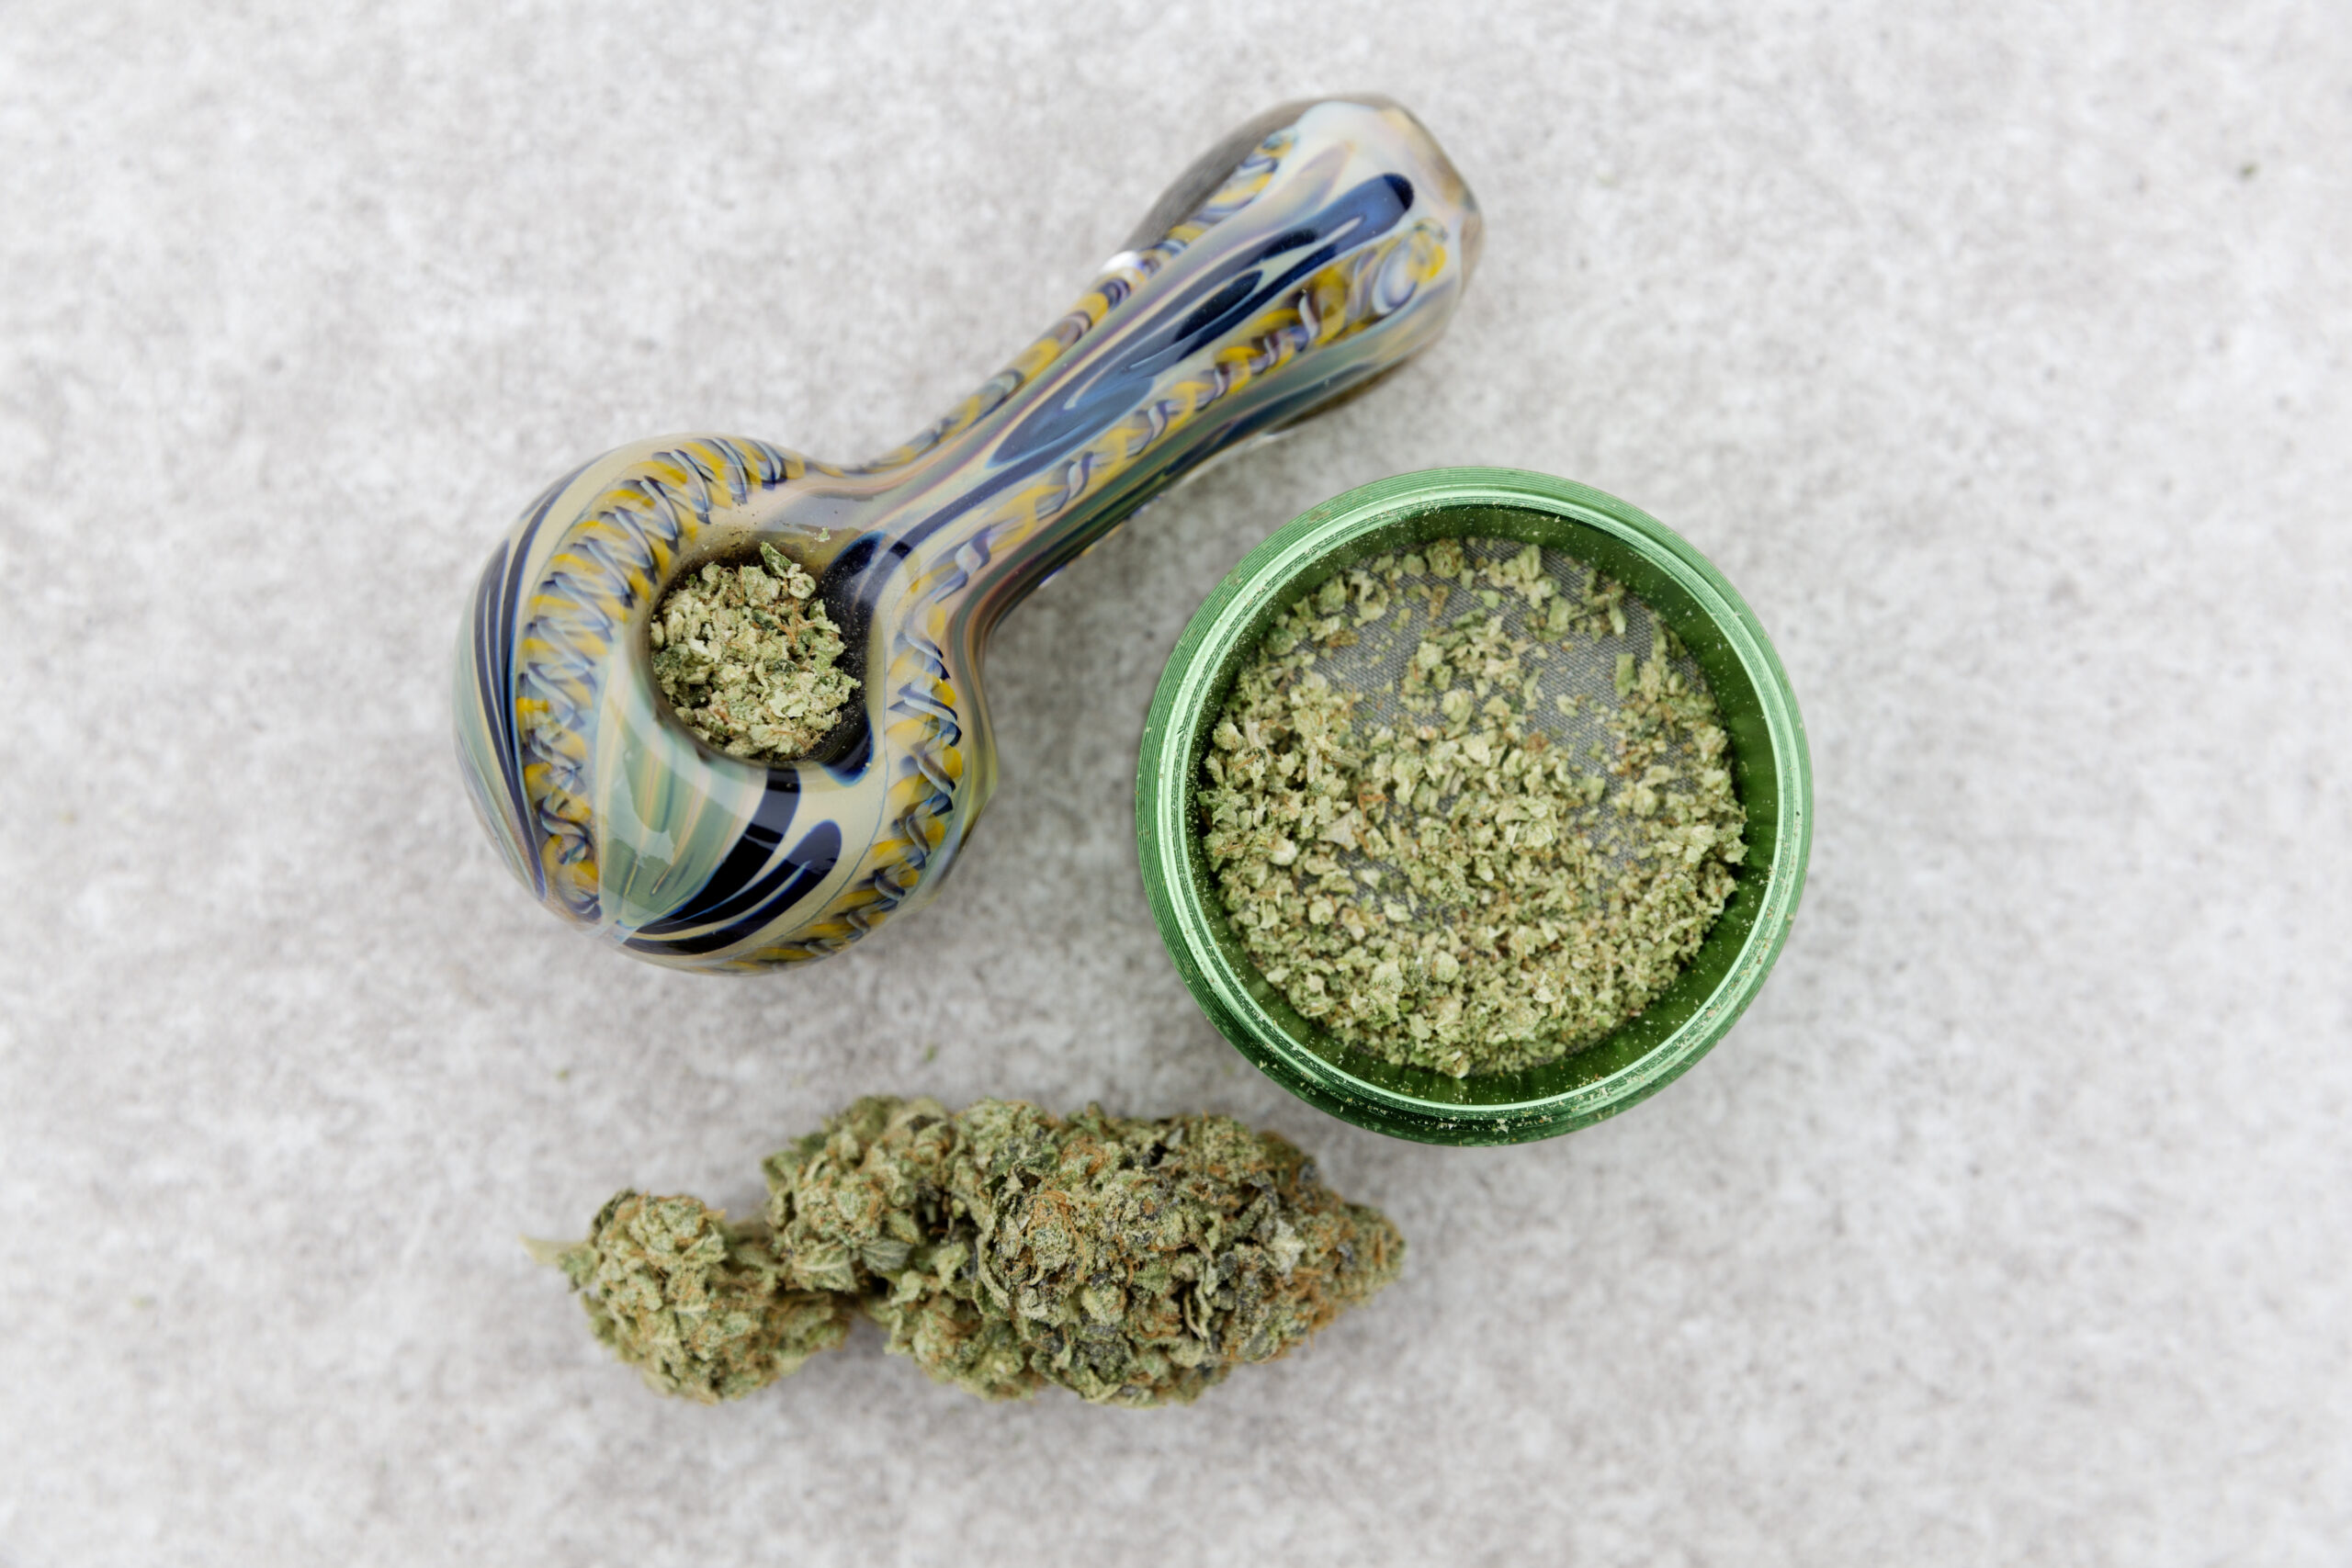 Marijuana Pipe, grinder and nug.